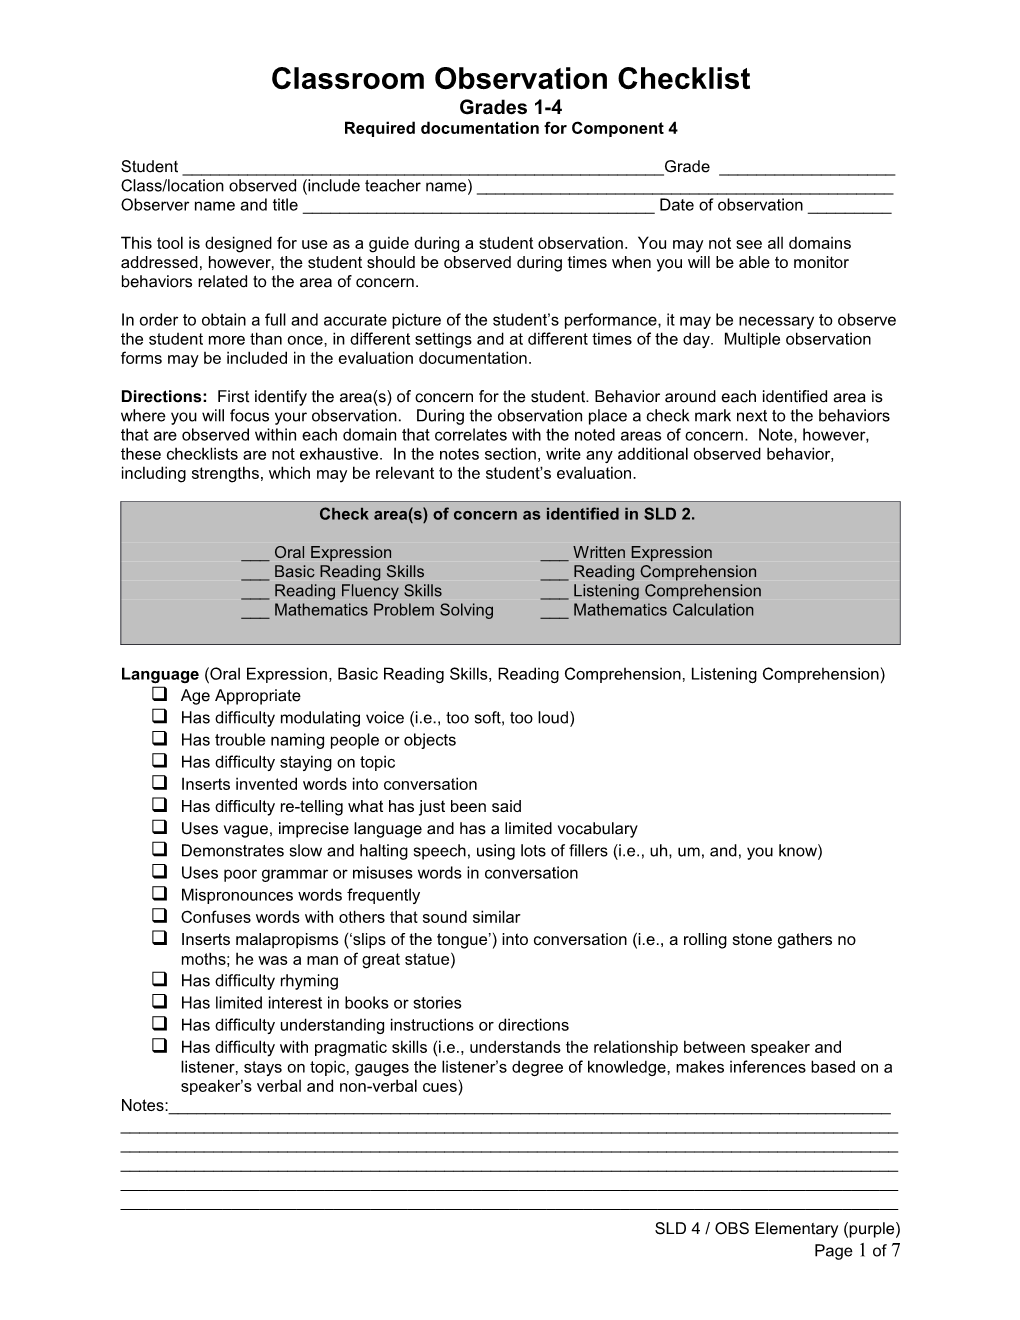 Classroom Observation Checklist Grades 1-4 (SLD4-OBS Elementary)